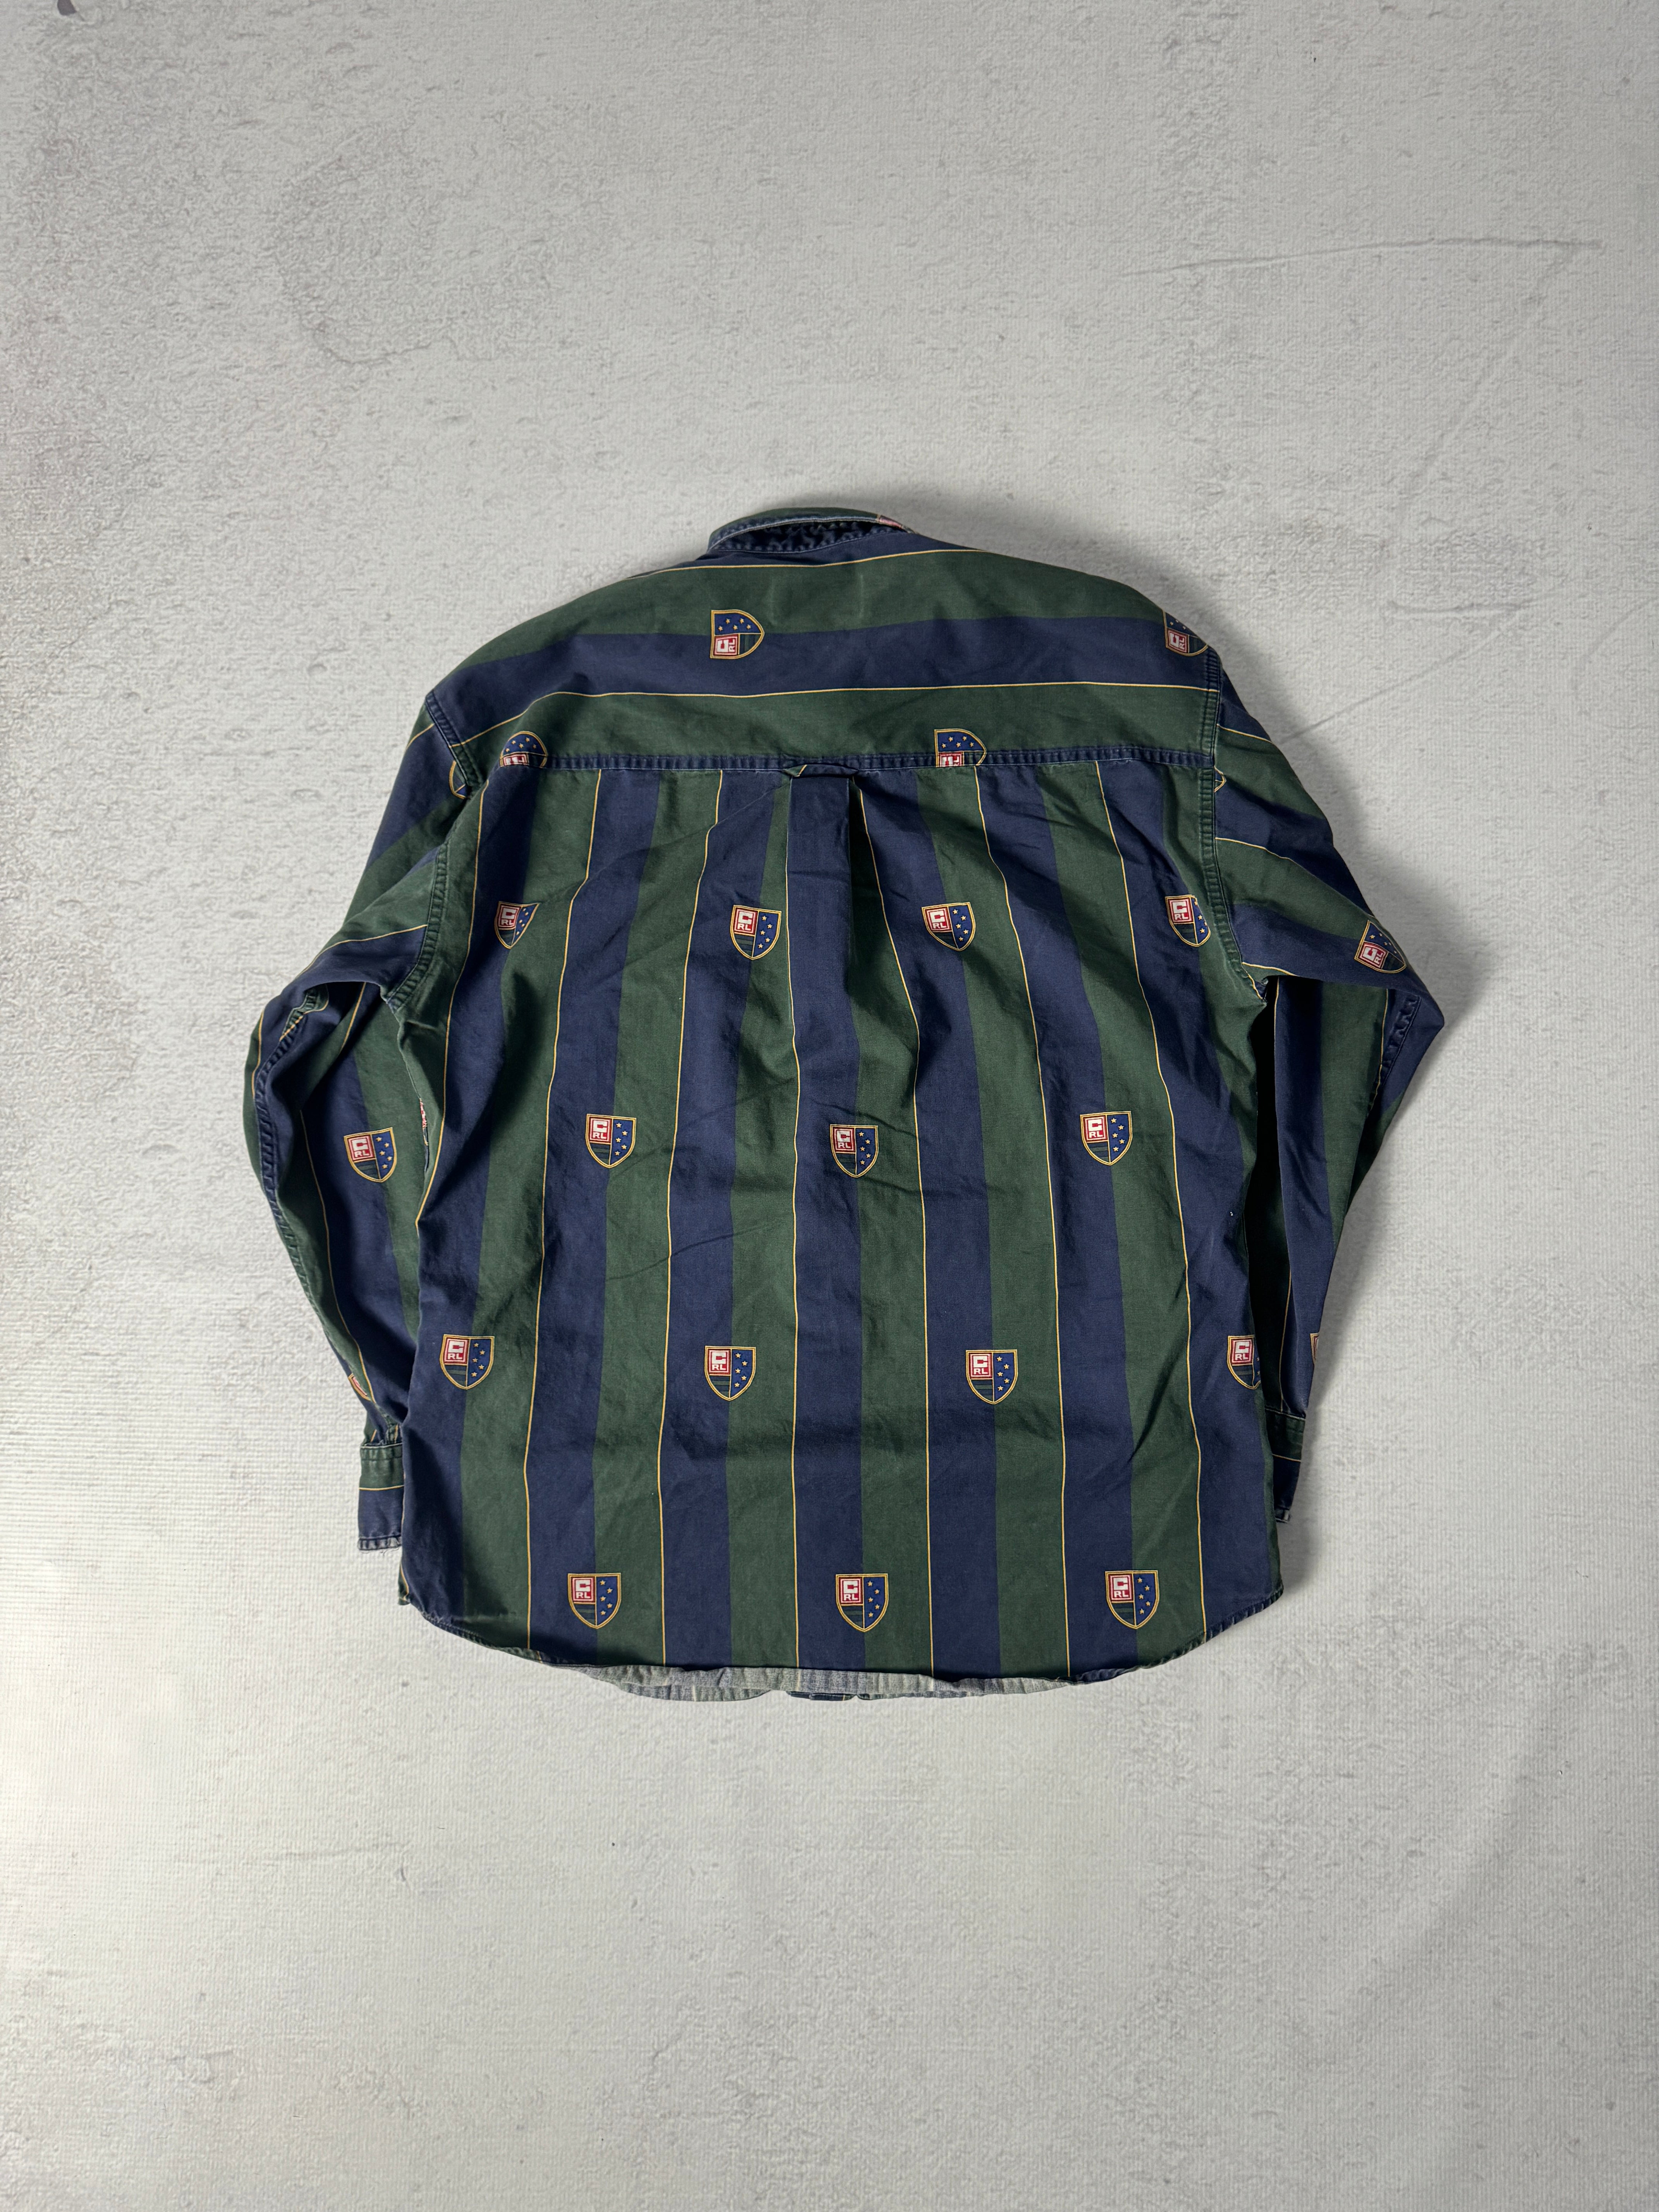 Vintage Chaps Ralph Lauren Striped Buttoned Shirt - Men's Medium